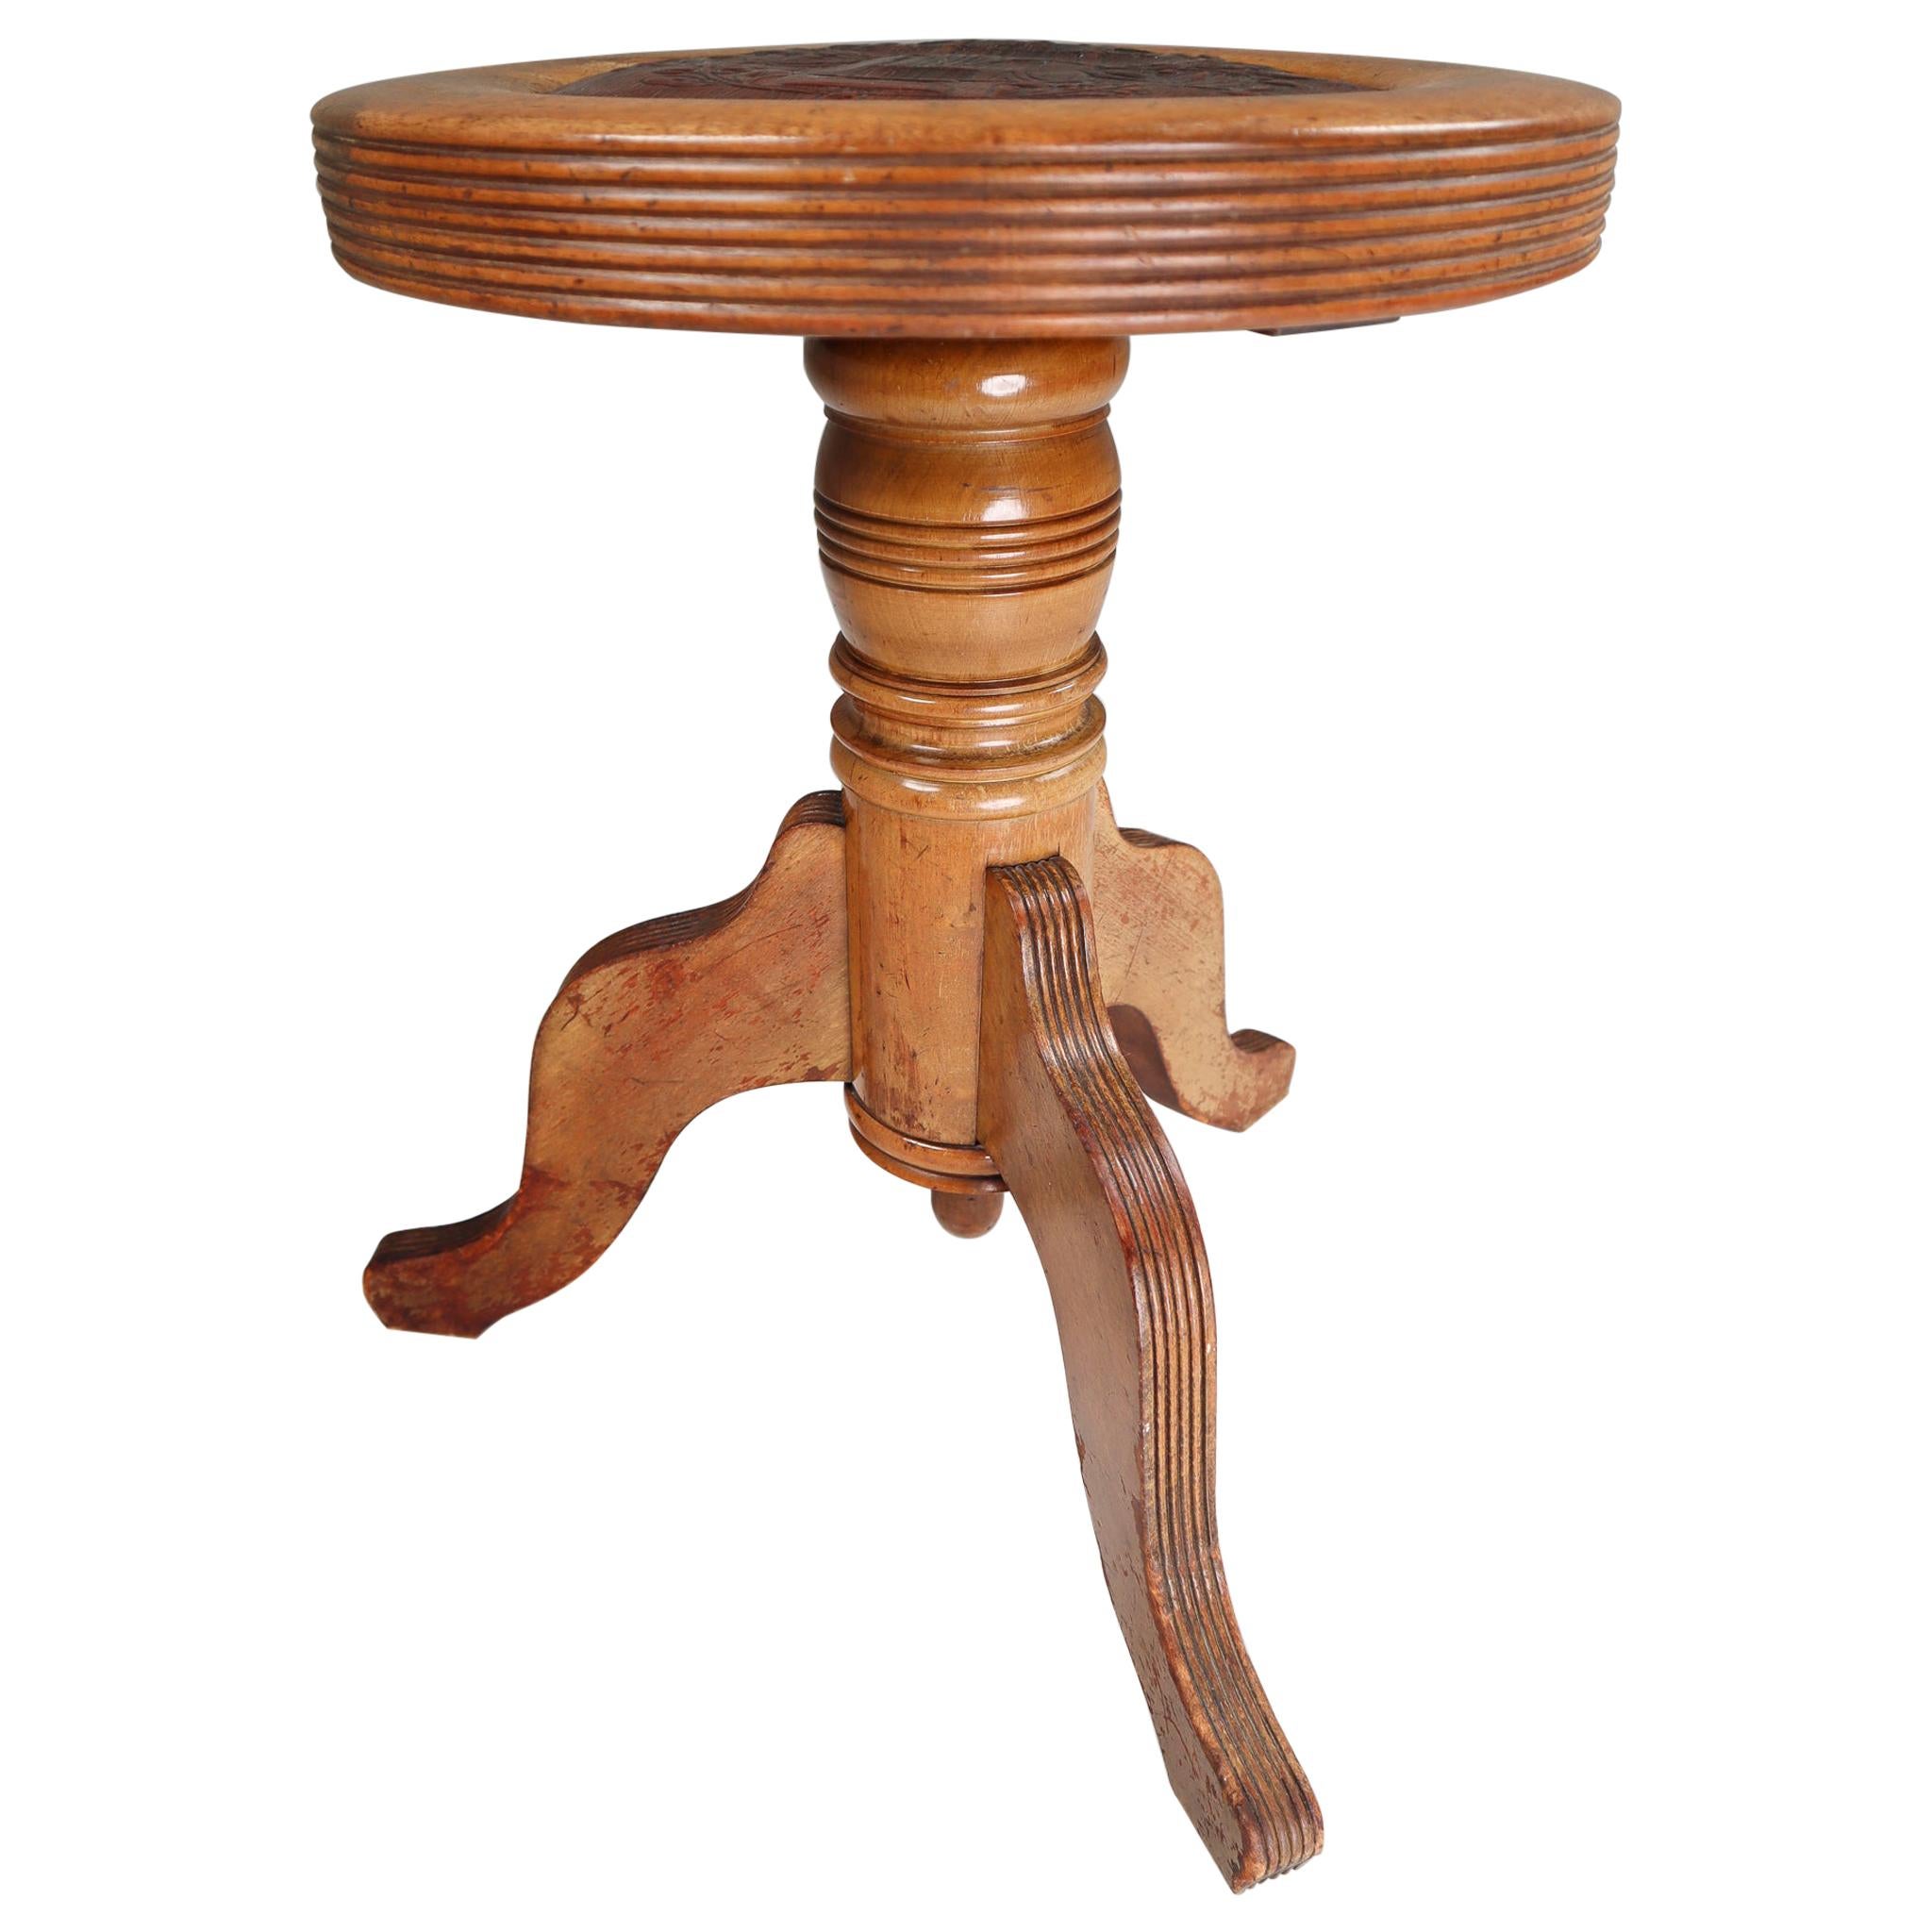 Patinated Victorian Era Walnut Adjustable Harp Stool with Original Leather Seat